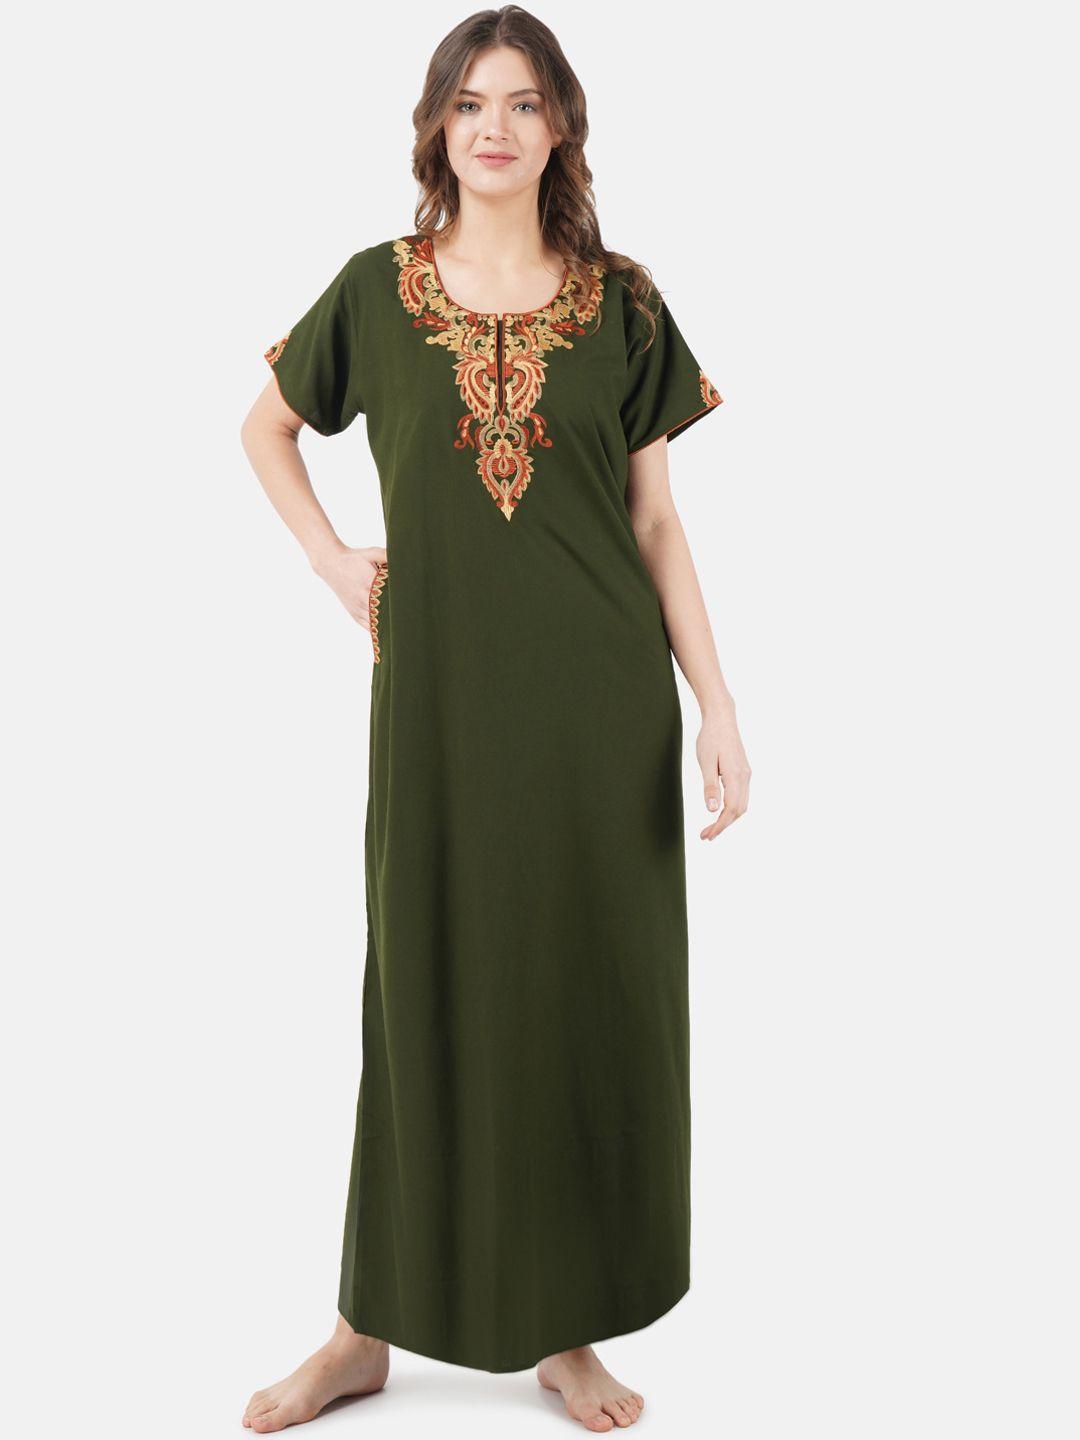 koi-sleepwear-olive-green-&-beige-embroidered-lissybissy-cotton-maxi-nightdress